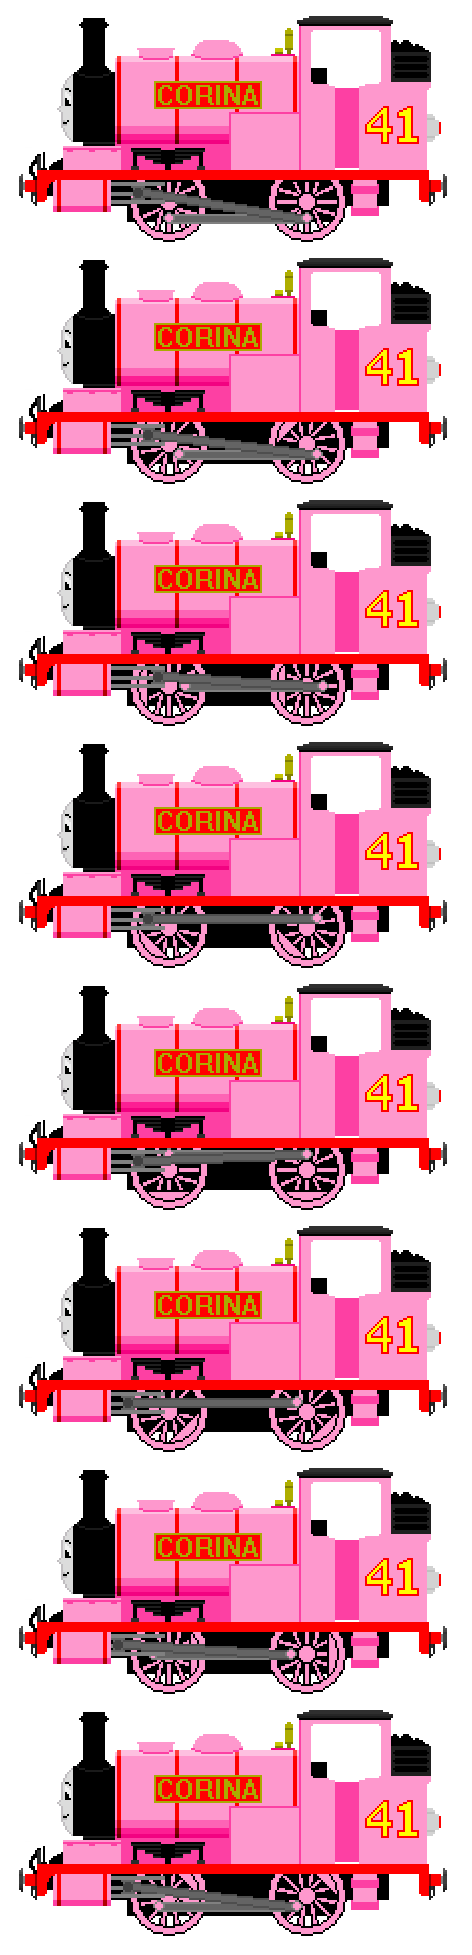 The Railfan Brony Blog: TTTE S13E3 - Tickled Pink